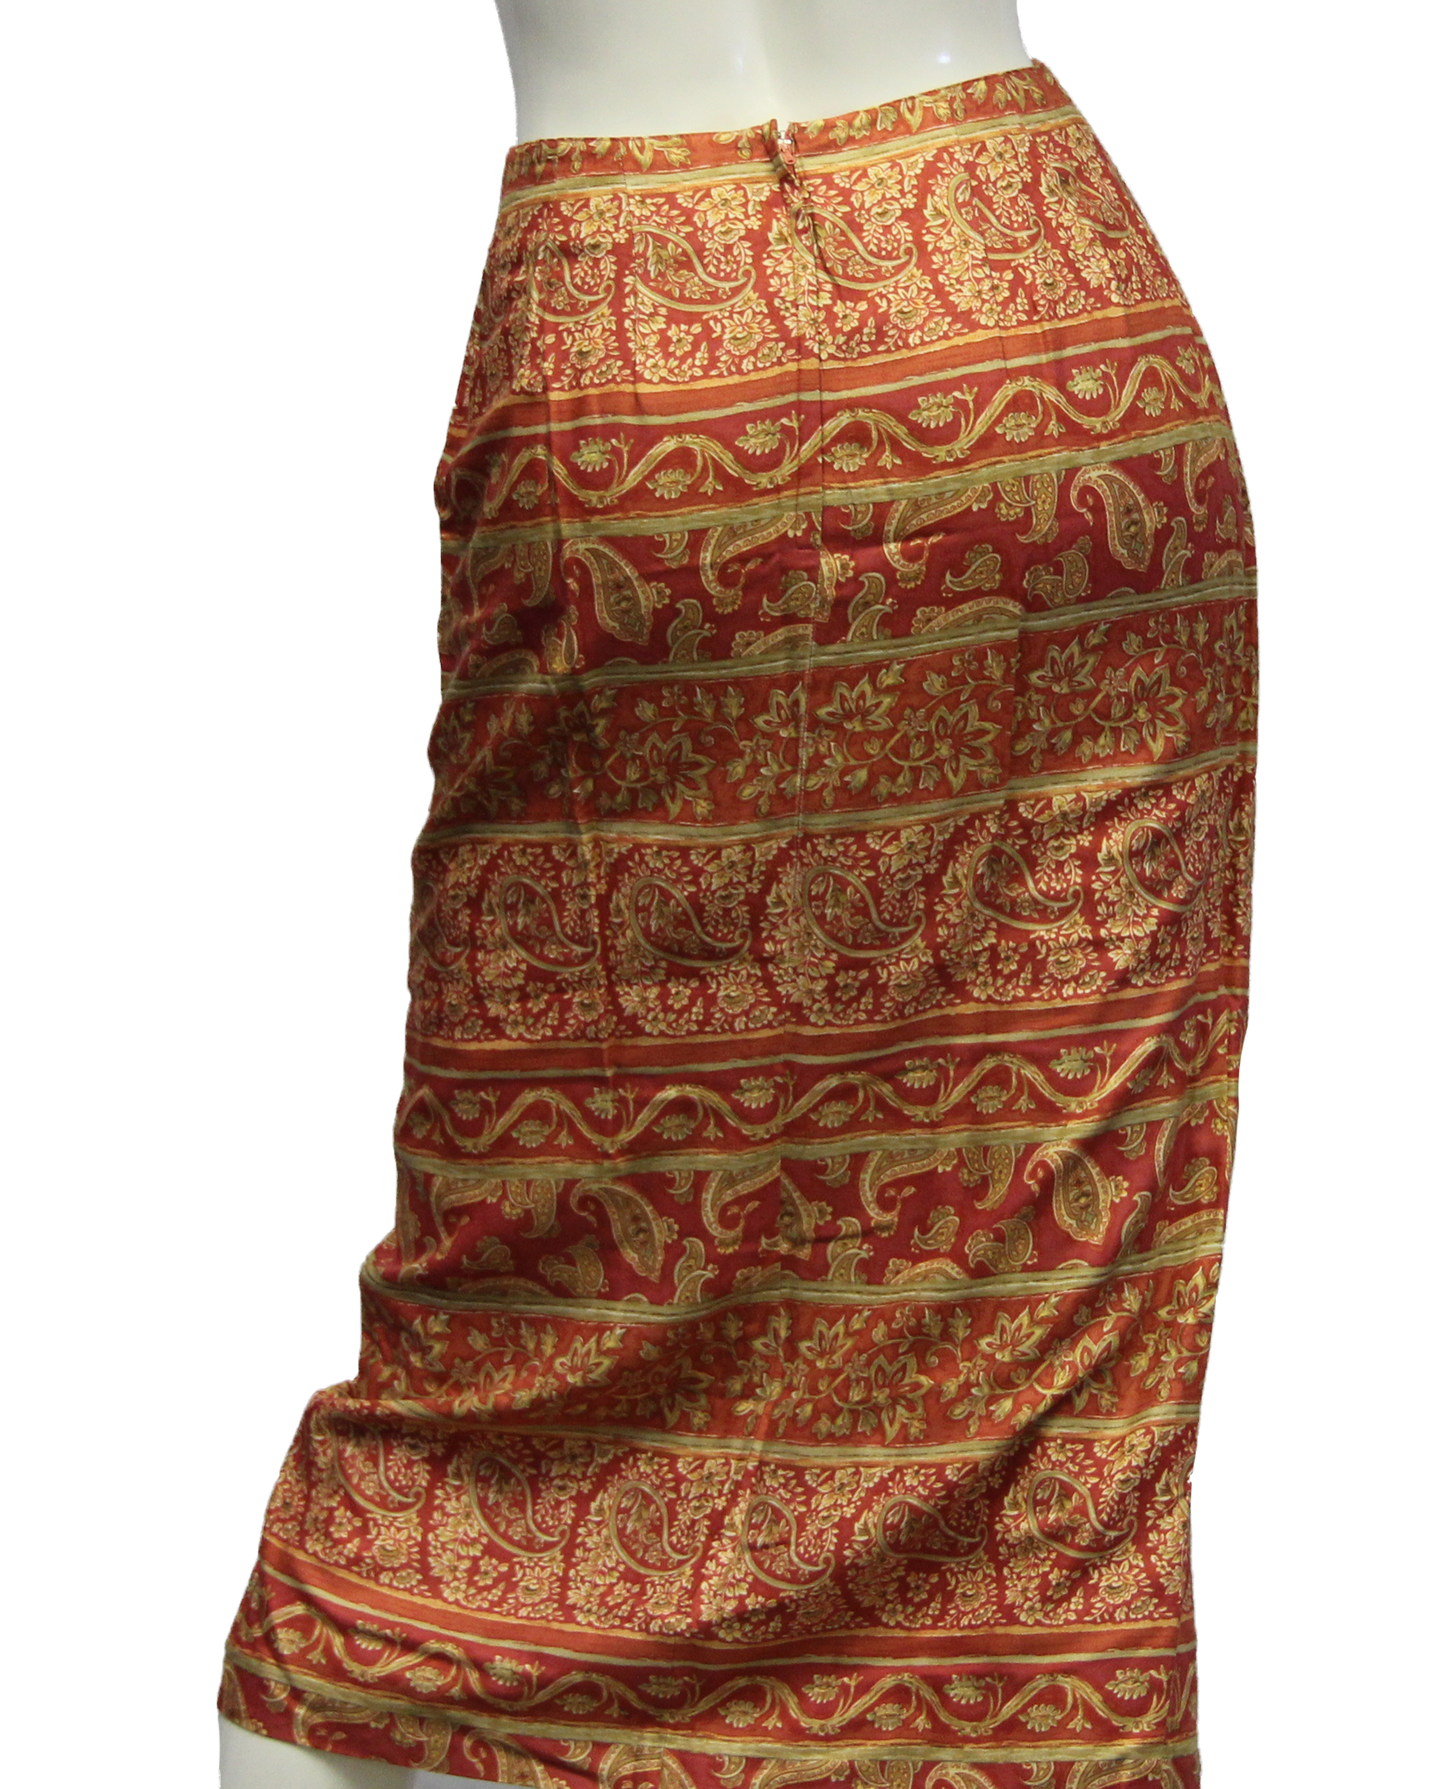 Talbots Wrap Around Skirt Size 4P (SKU 000028) - Designers On A Dime - 4